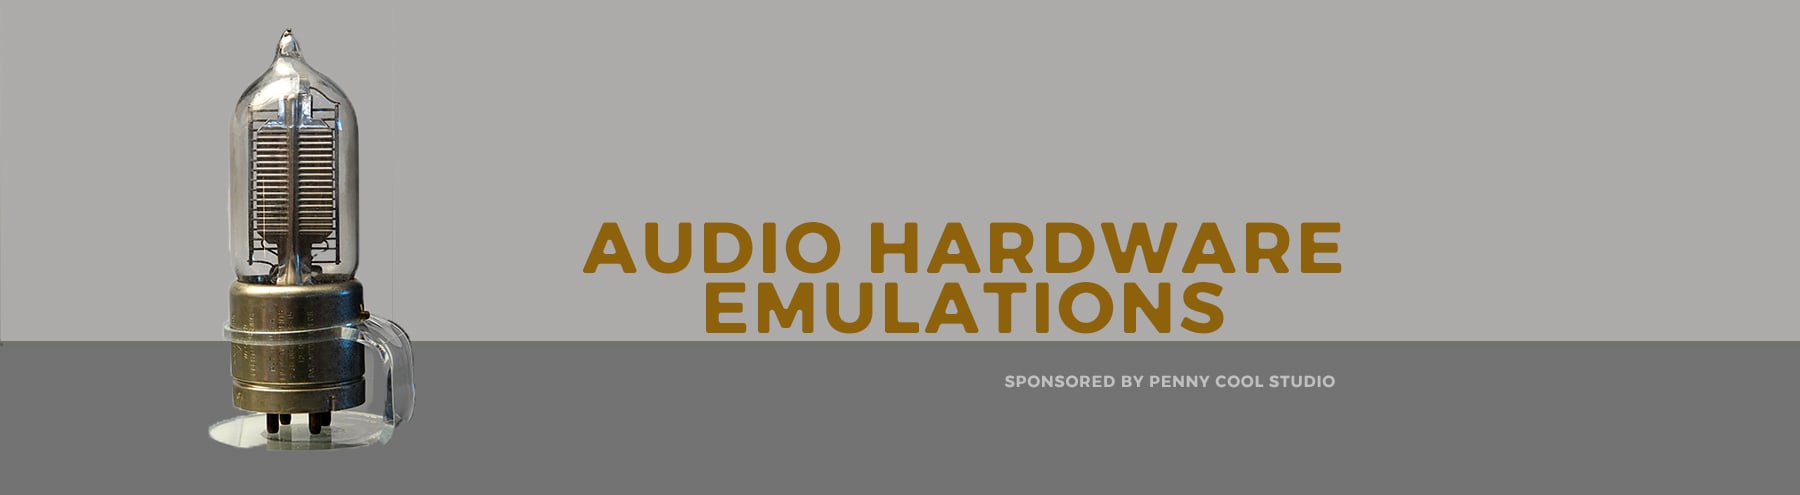 audio hardware emulations banner